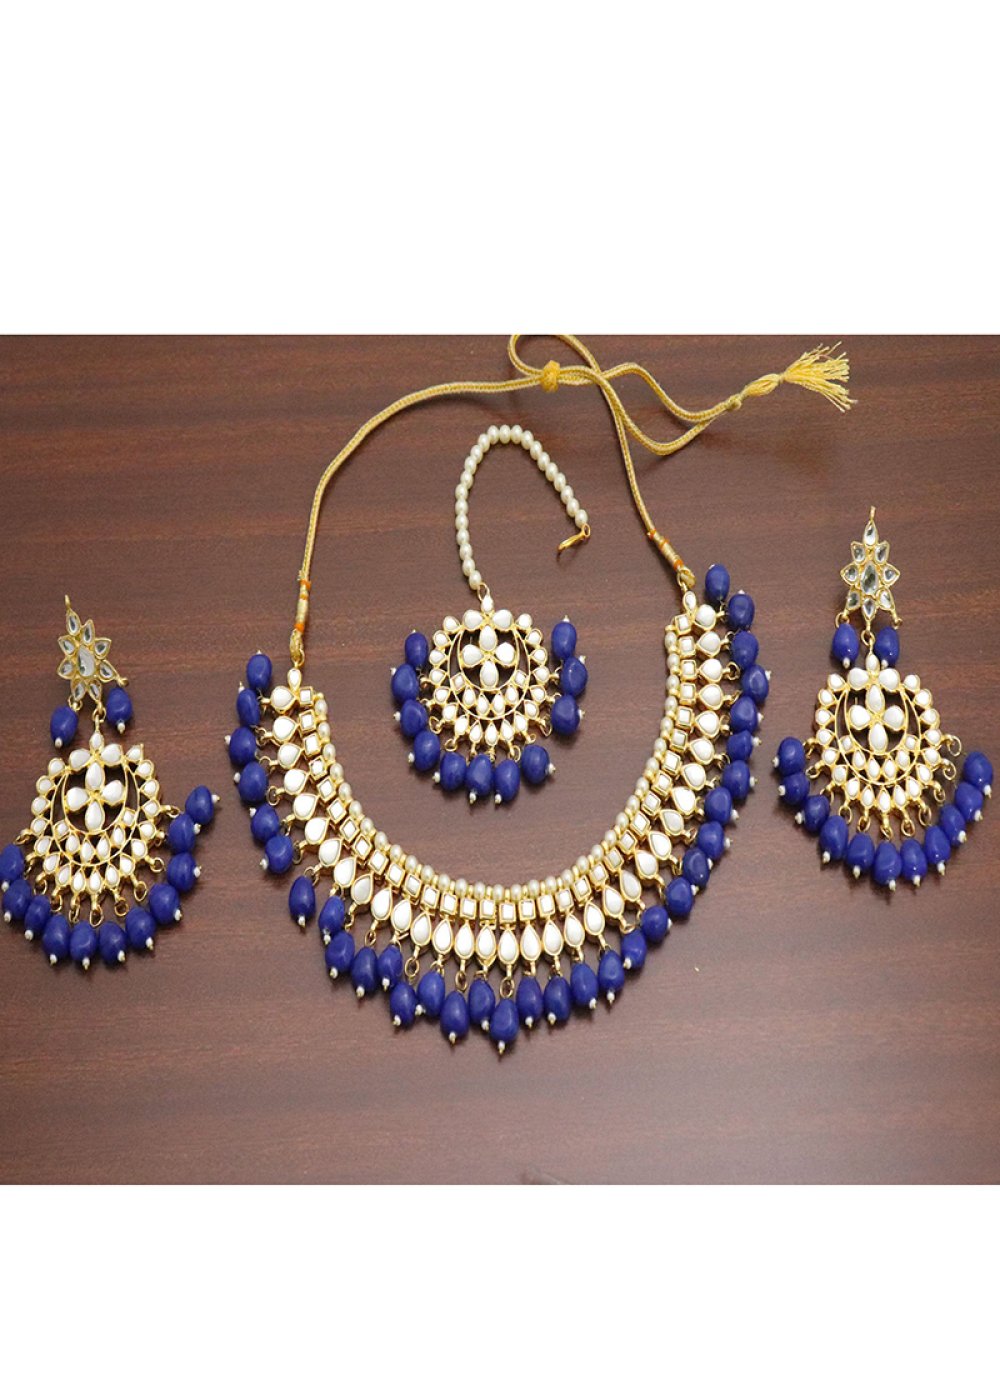 Yellow flower jewellery set for Haldi - Saubhagyavati.in